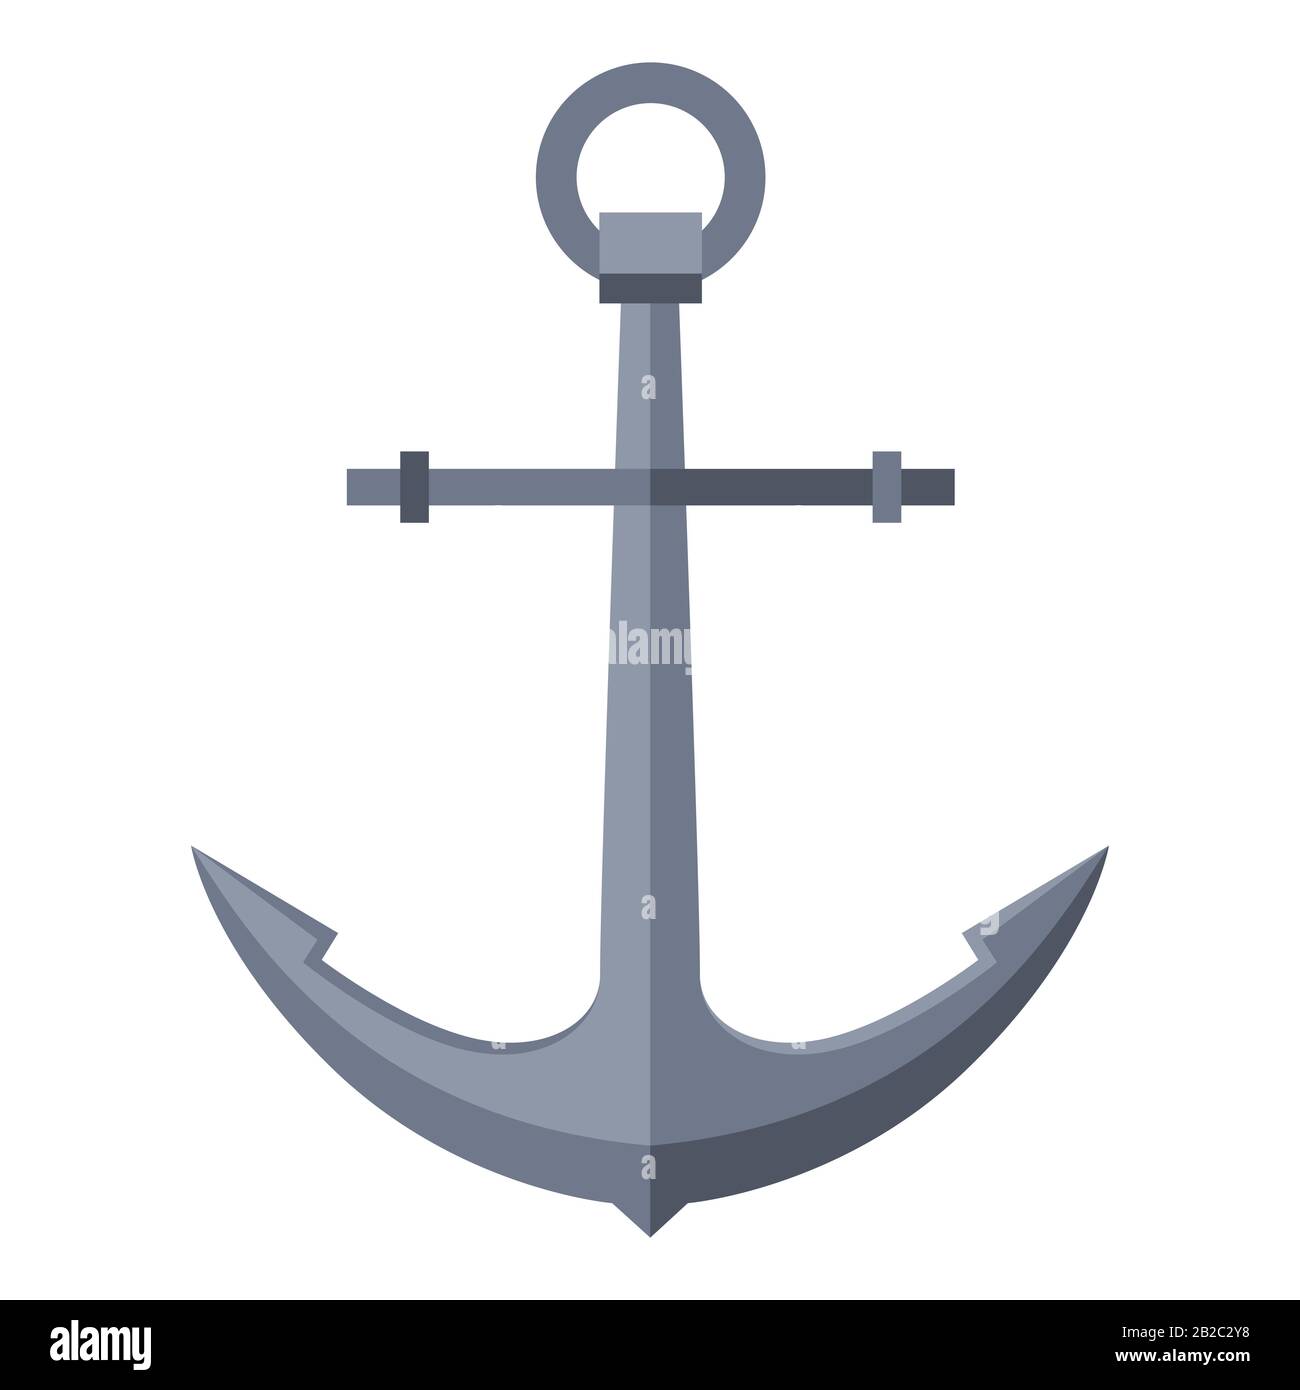 https://c8.alamy.com/comp/2B2C2Y8/illustration-of-ship-anchor-nautical-symbol-icon-2B2C2Y8.jpg